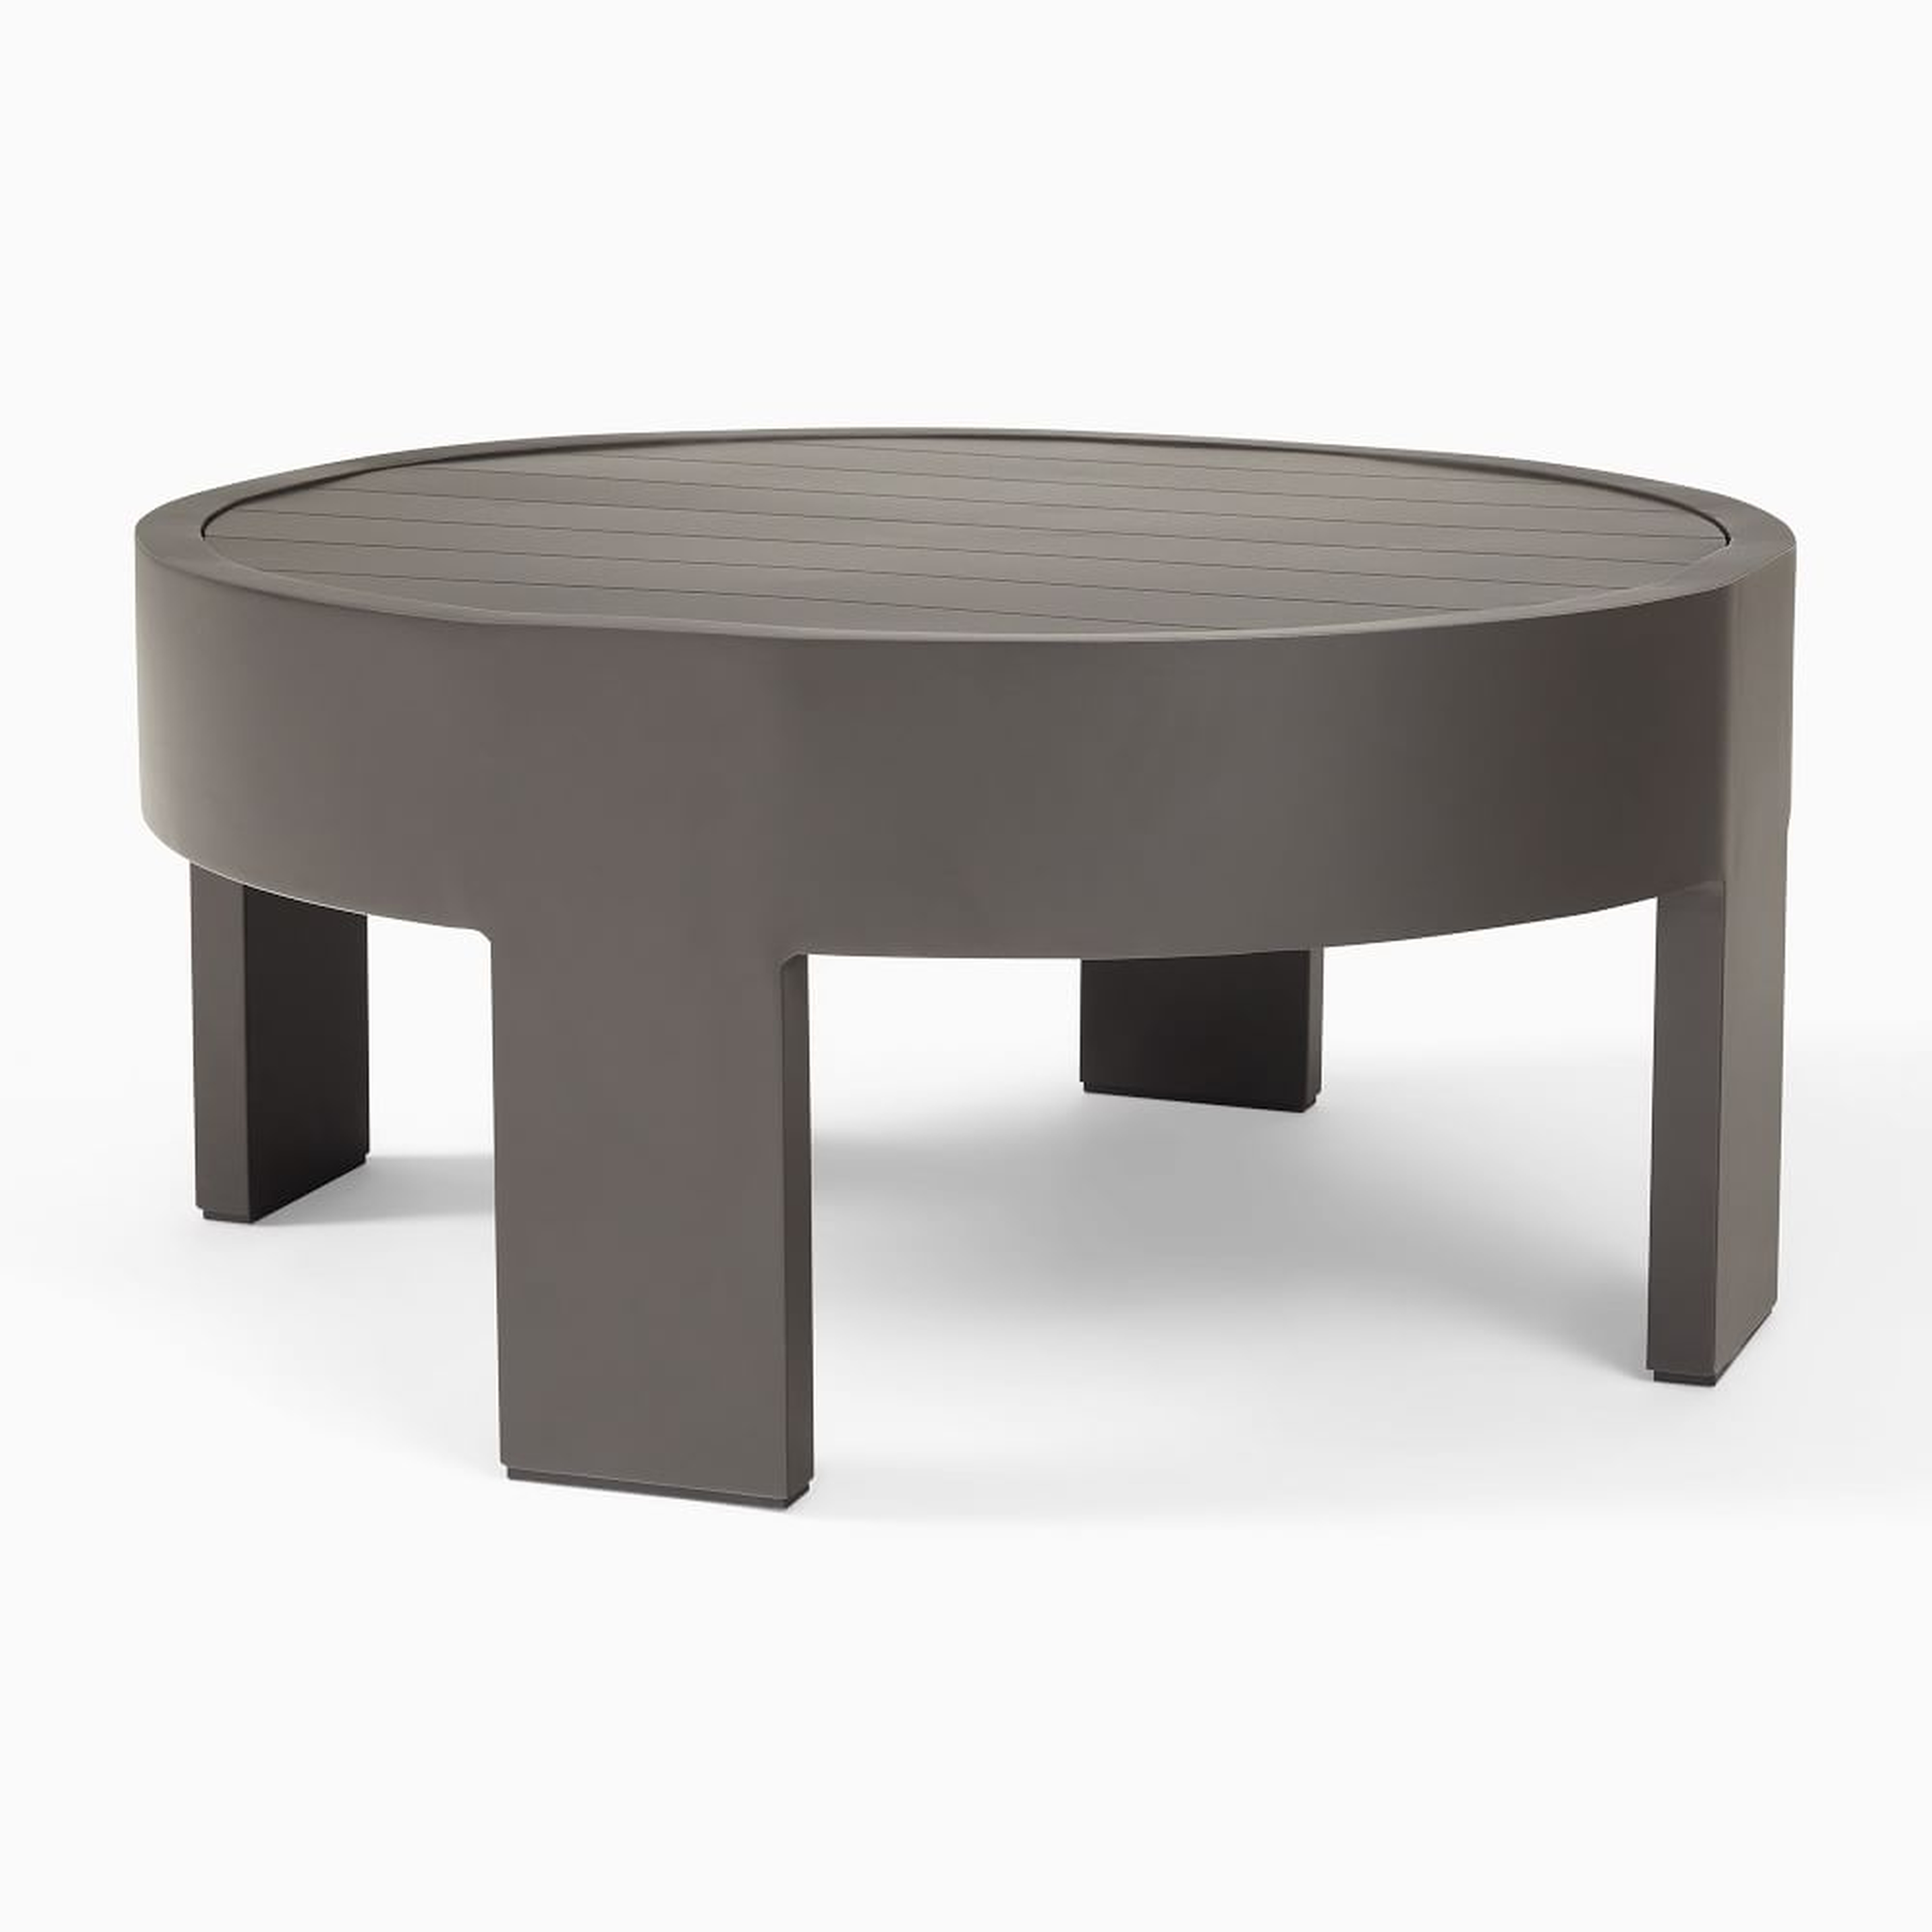 Caldera Aluminum Outdoor 34 in Round Coffee Table, Dark Bronze - West Elm